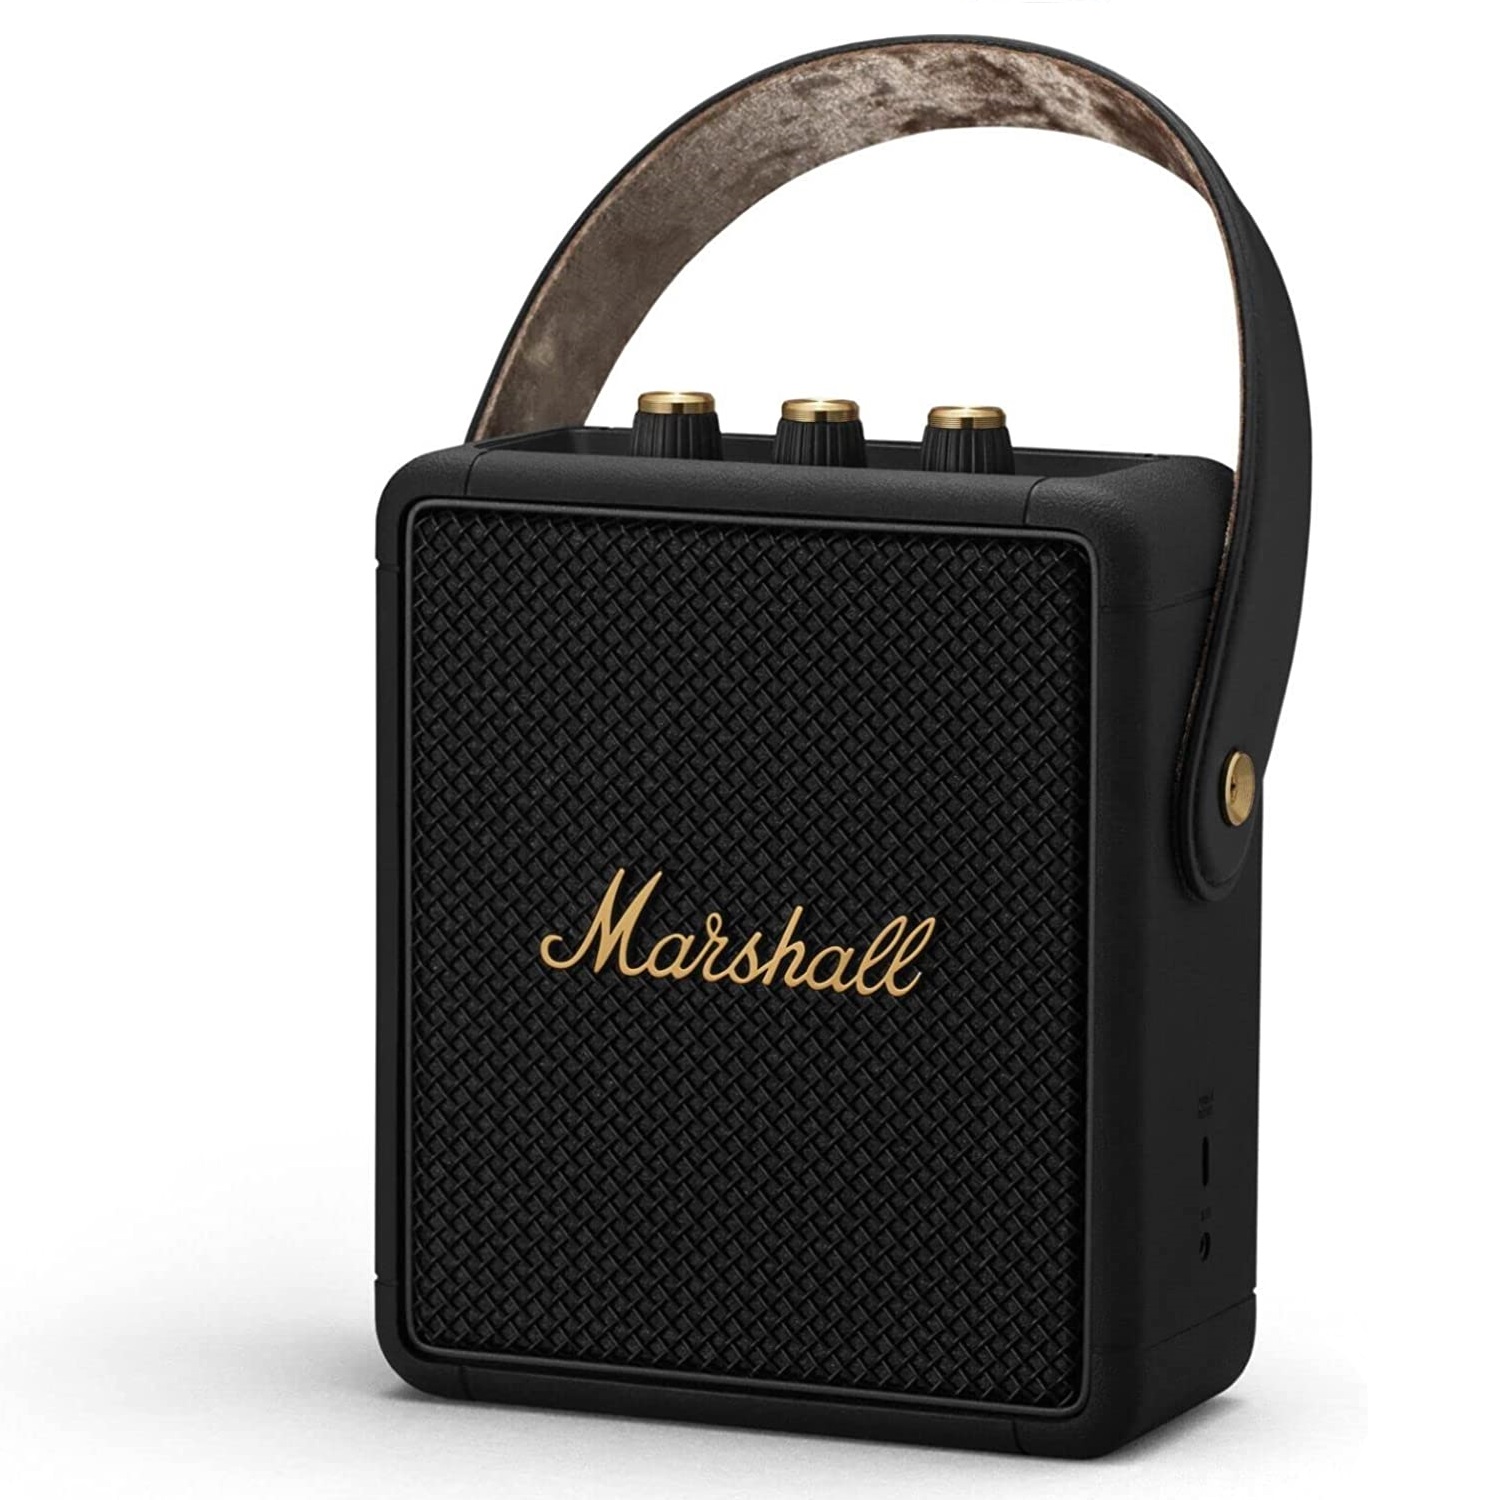 Портативная колонка Marshall Stockwell II, черный и медь портативная акустика marshall stockwell ii 20 вт black and brass